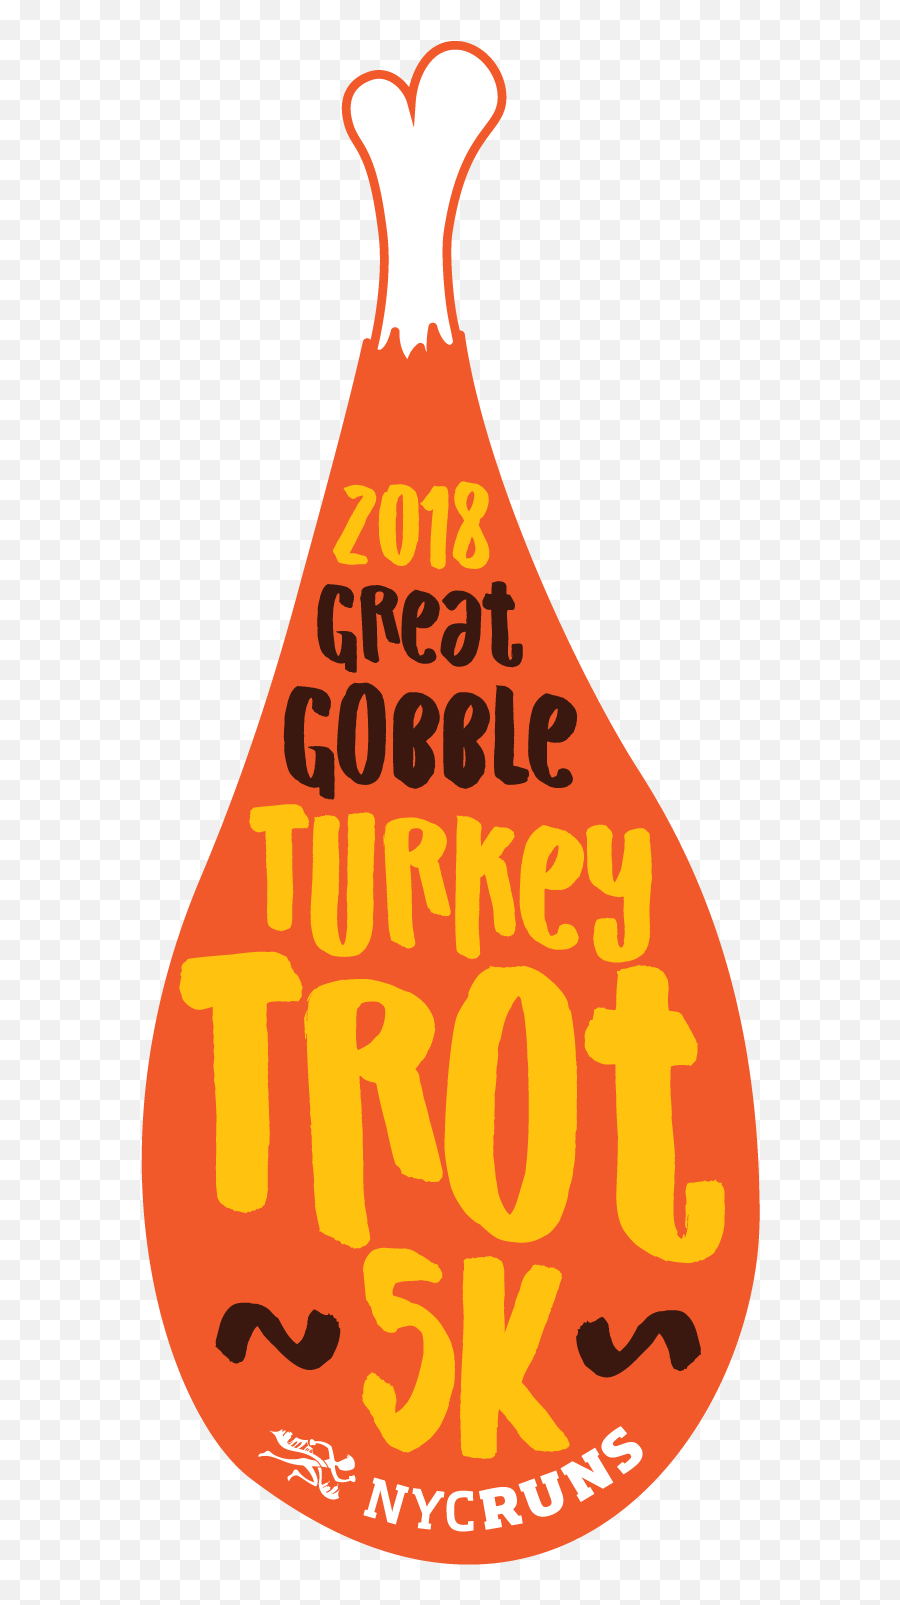 Download Nycruns Great Gobble Turkey Trot Roosevelt Island Emoji,Turkey Trot Clipart